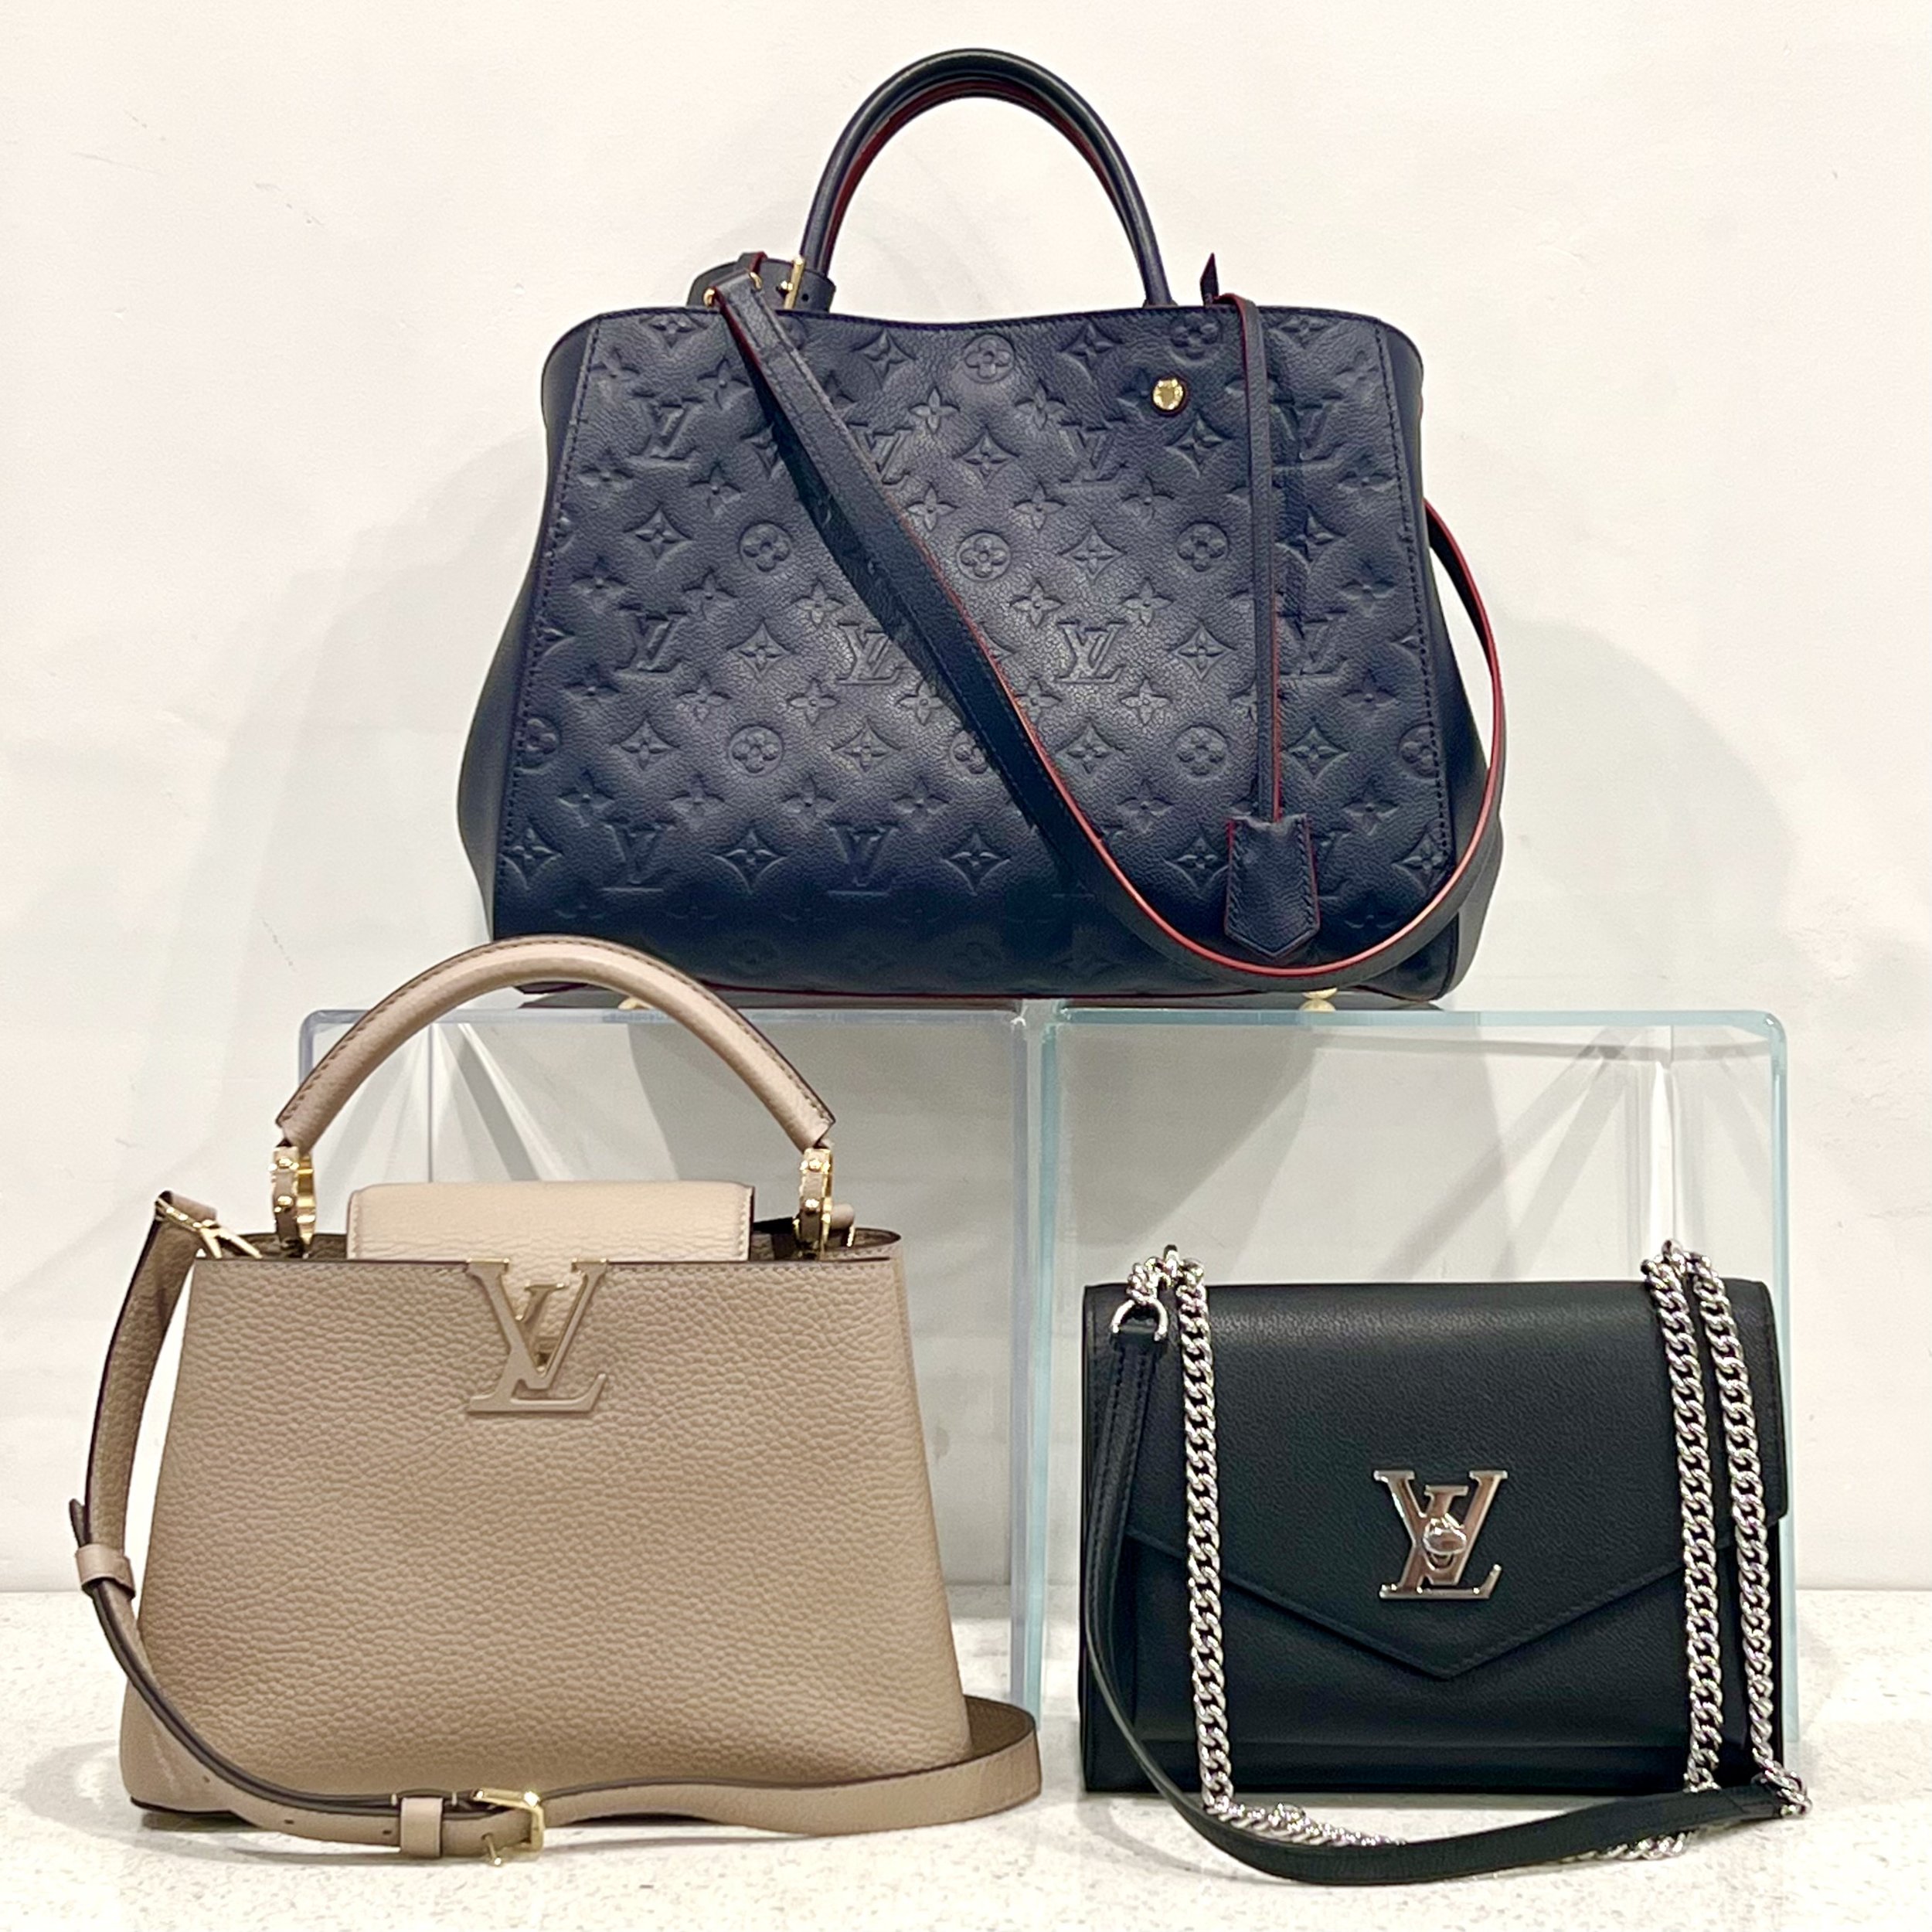 Louis Vuitton Handbags for sale in Boston, Massachusetts